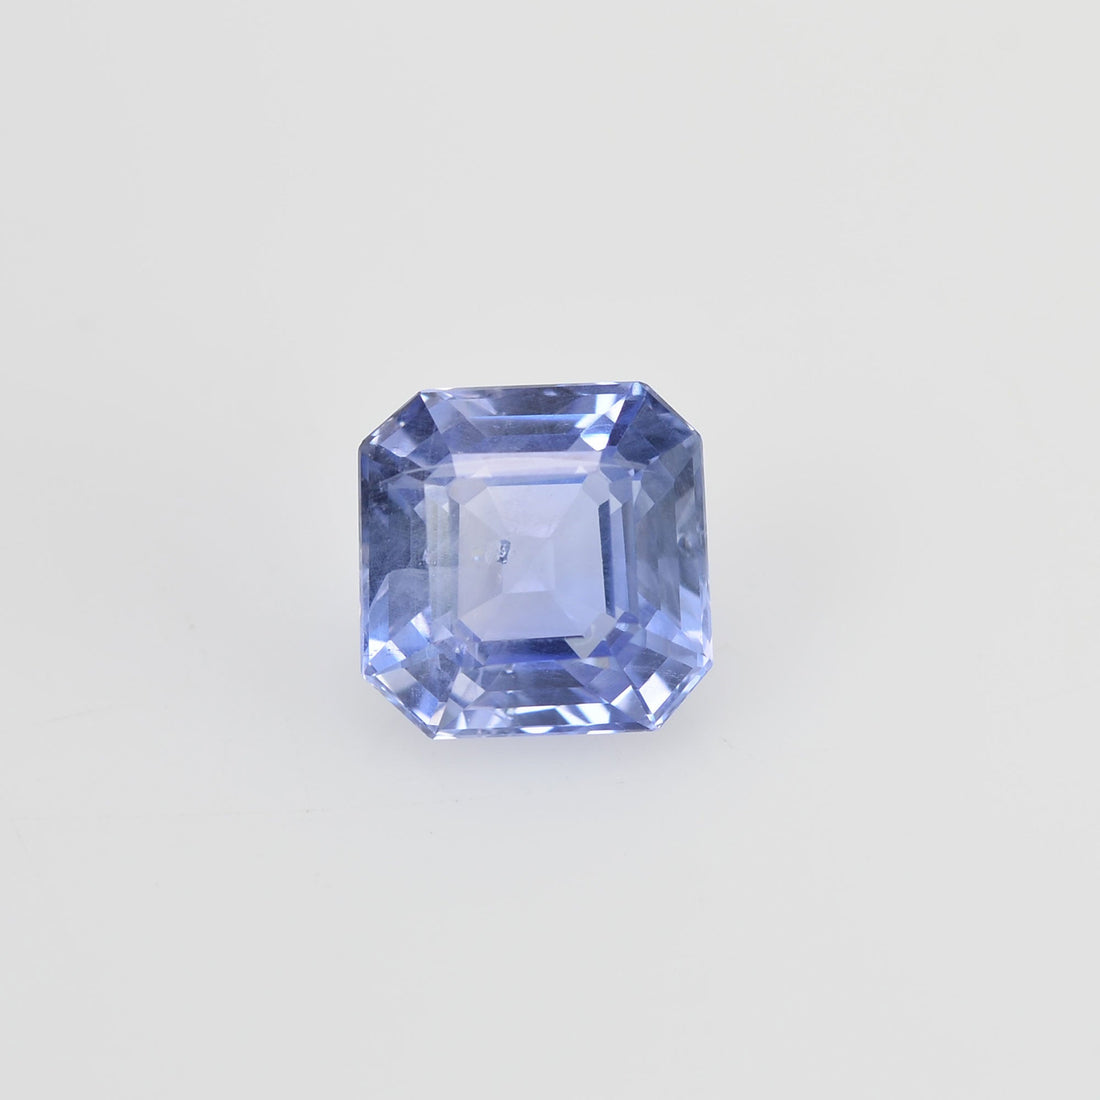 1.27 cts Unheated Natural Blue Sapphire Loose Gemstone Octagon Cut - Thai Gems Export Ltd.